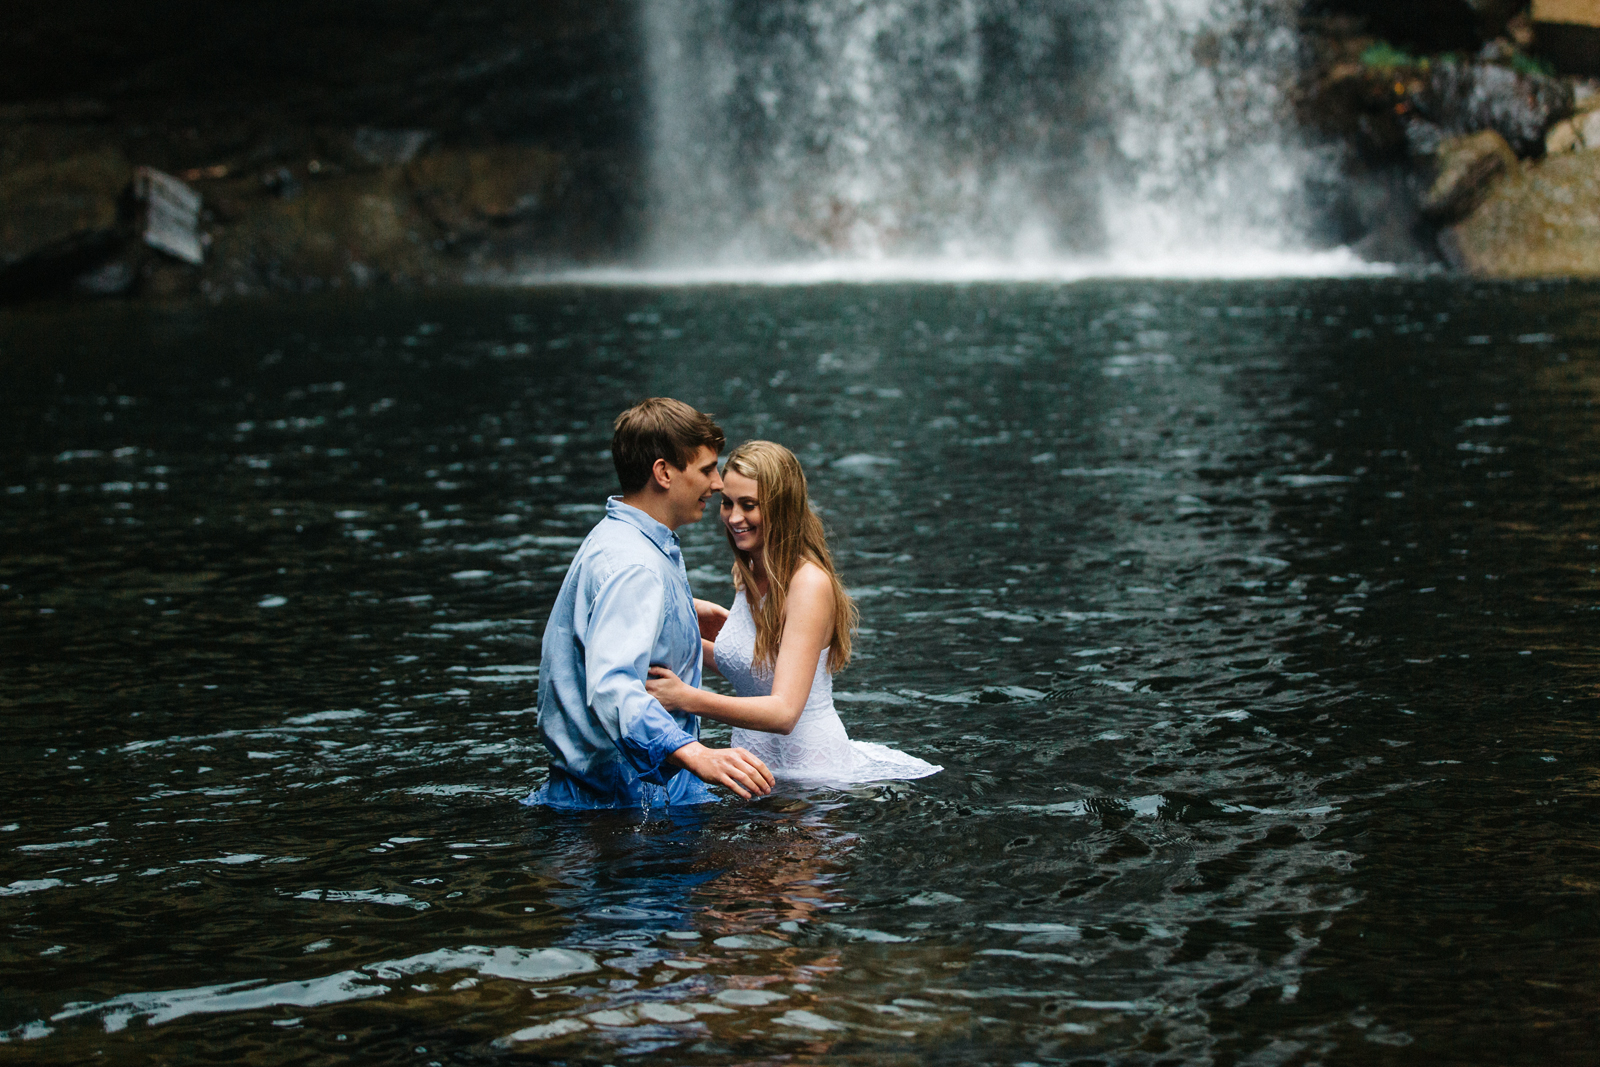 Waterfall engagement session photos | Nashville TN Wedding Photographer Laura K. Allen | Tennessee Greeter Falls Engagement